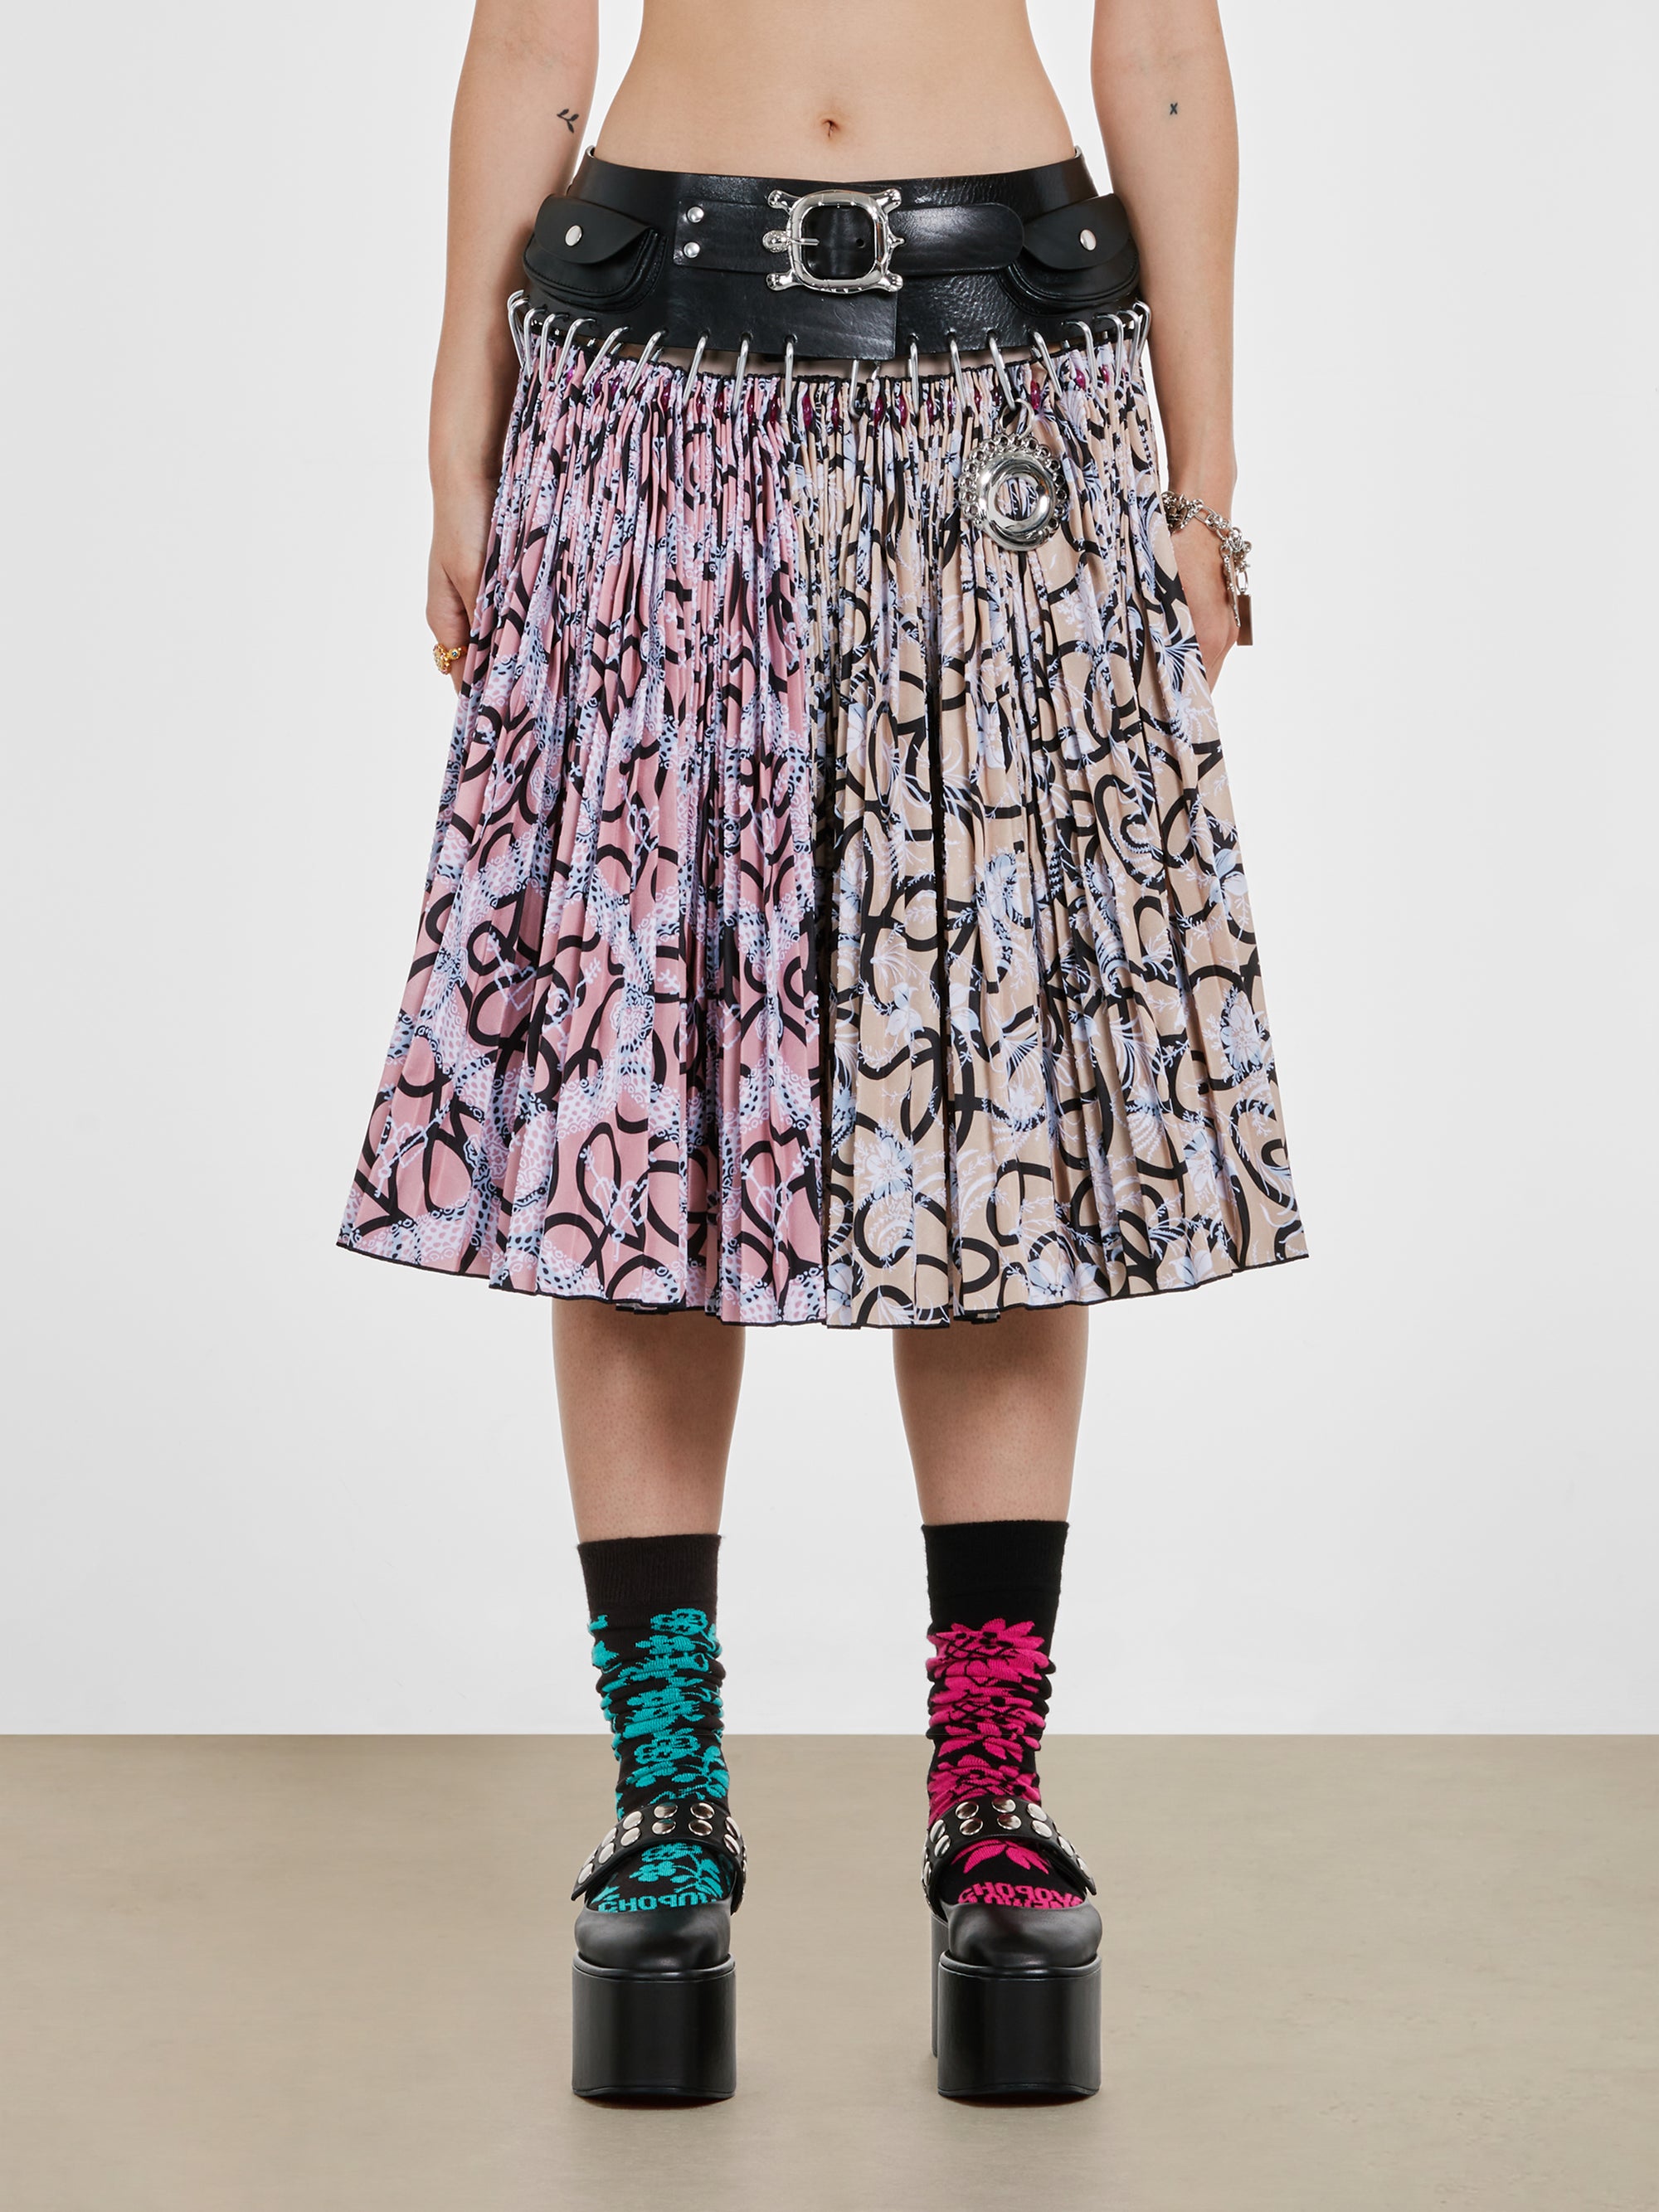 Chopova Lowena - Women’s Soldeu Midi Carabiner Skirt - (Pink/Brown) view 2